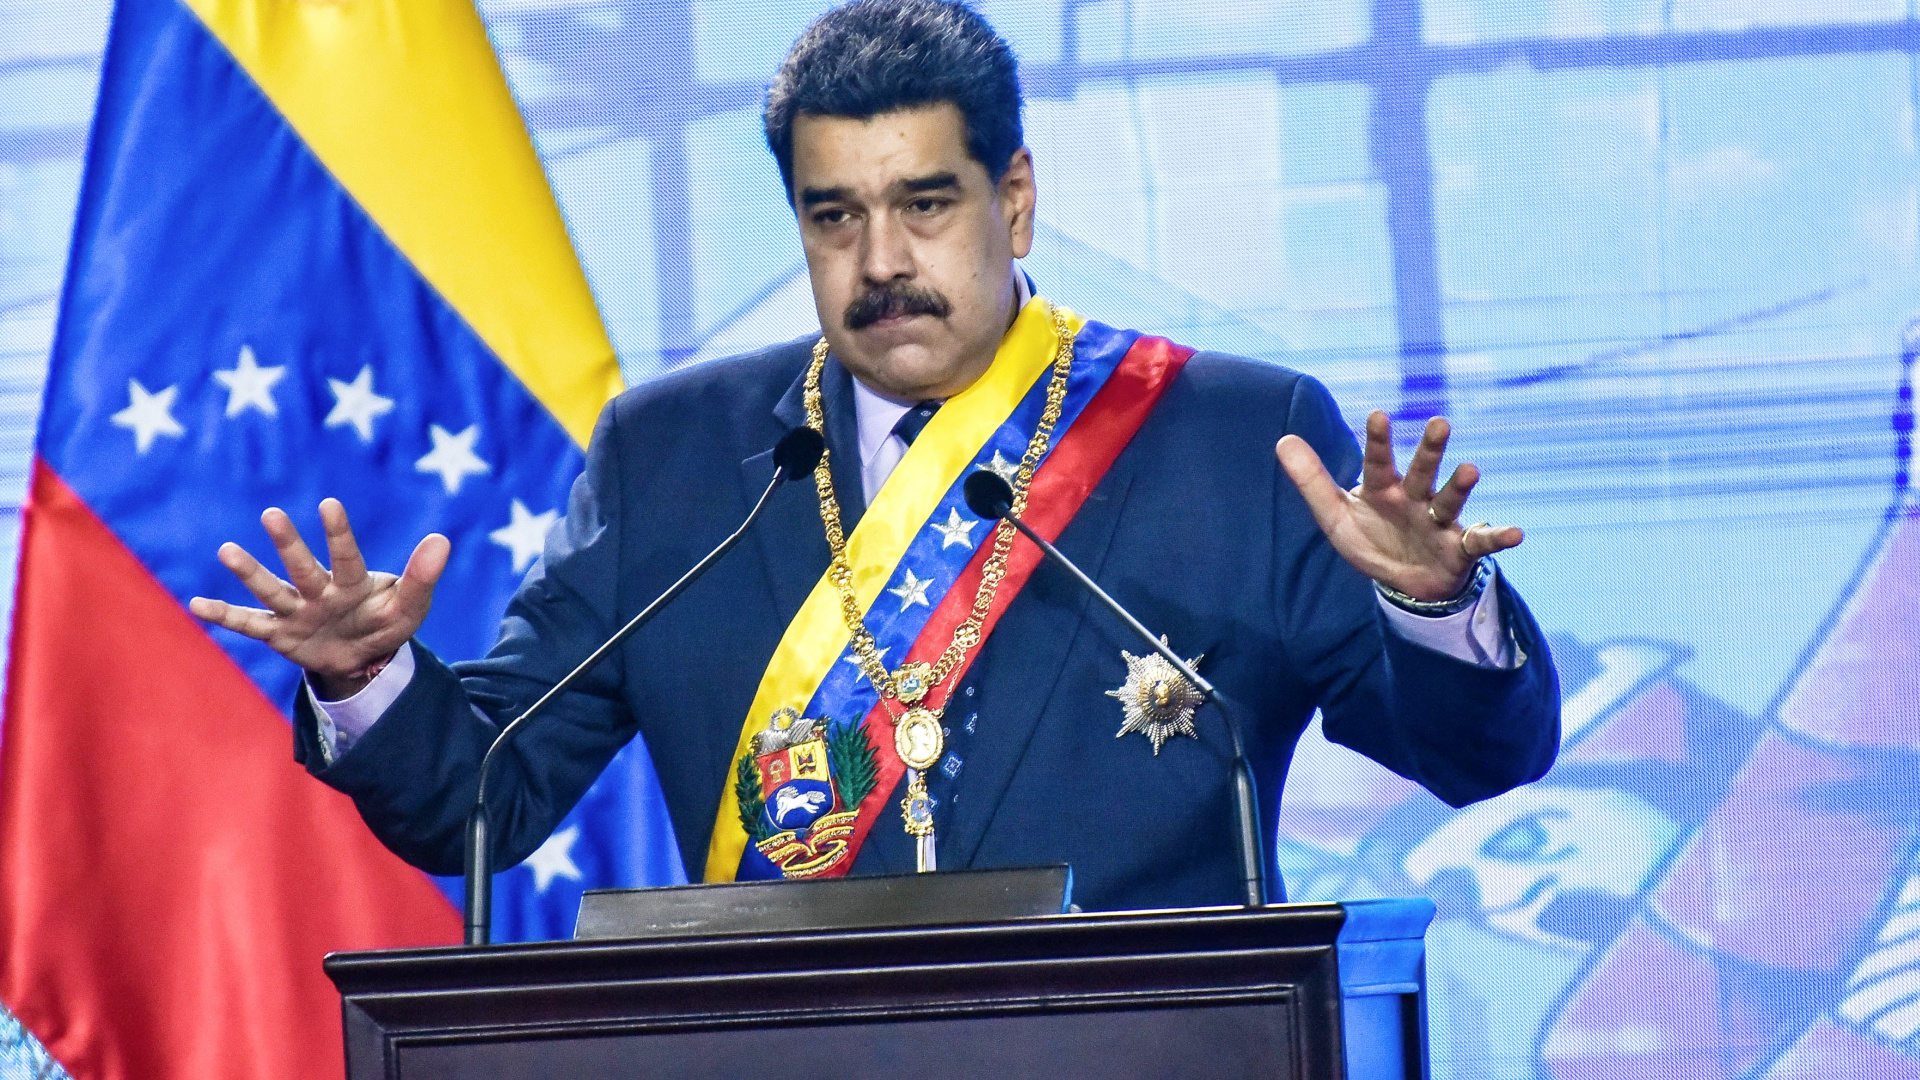 'Venezuela suffered an attack'